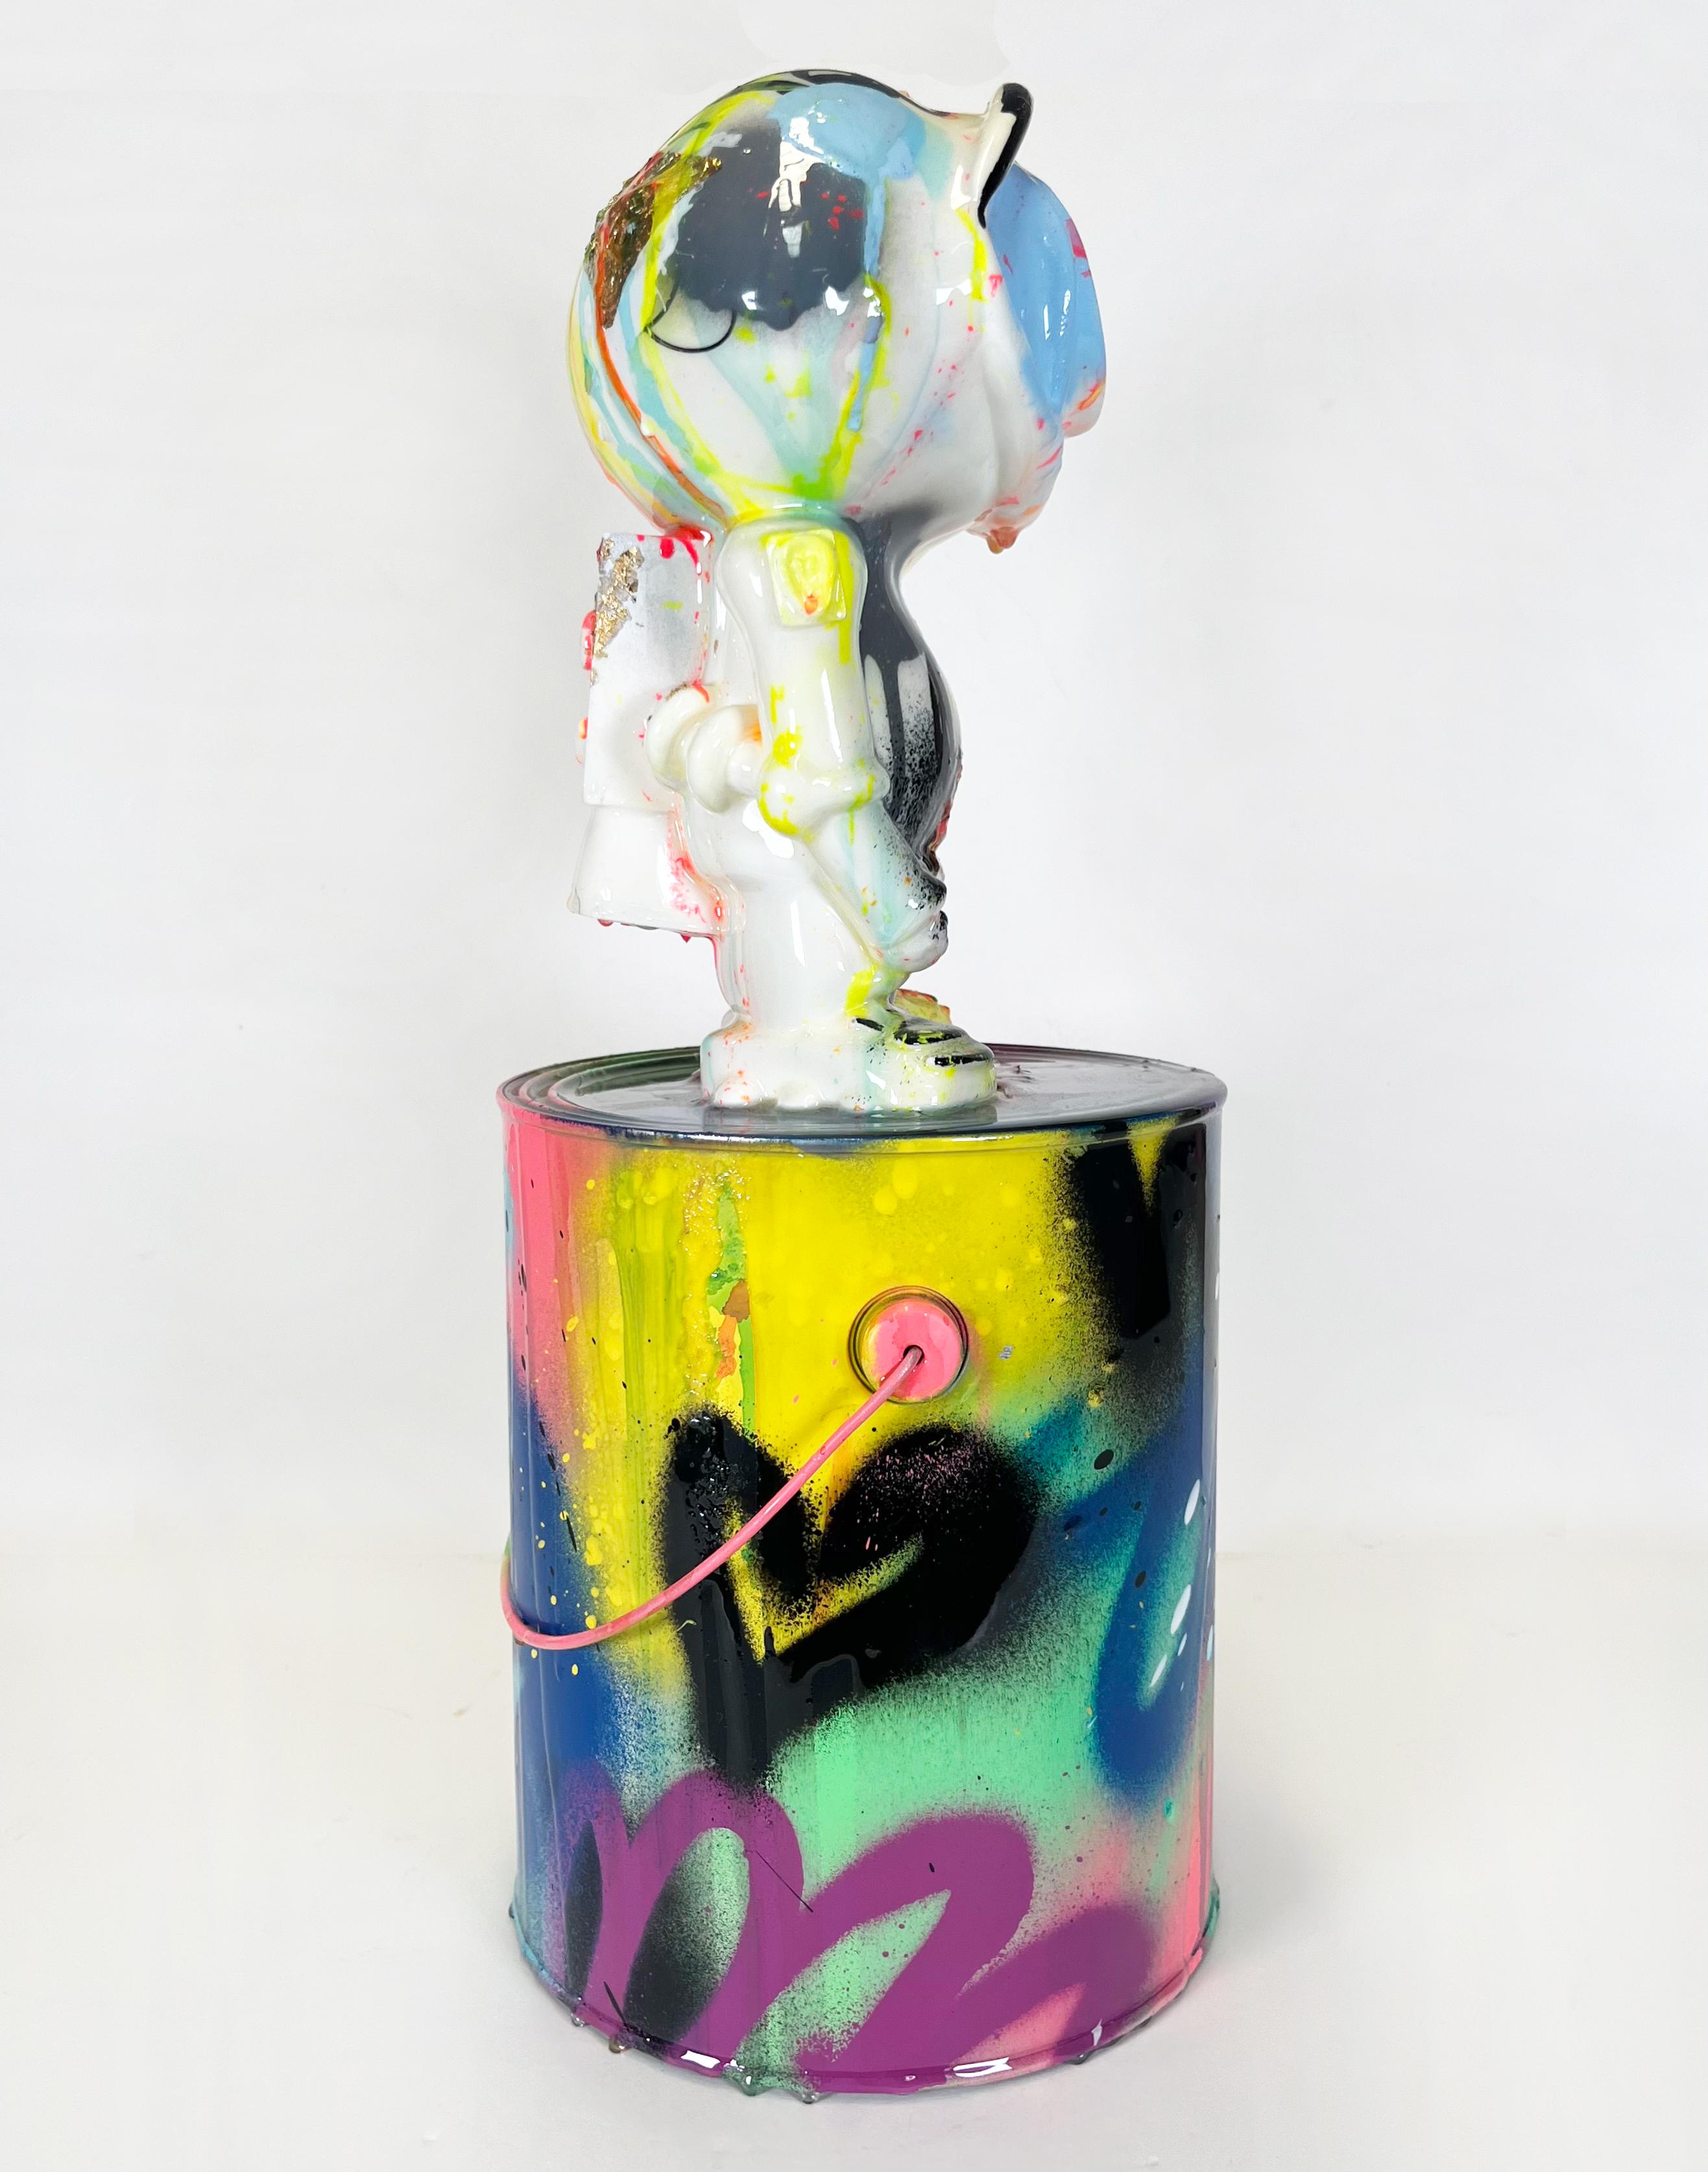 Technicolour Xeno Paint Can v2, farbenfrohe und kühle Figurenskulptur aus Harzguss, Xeno – Sculpture von Chris Solcz